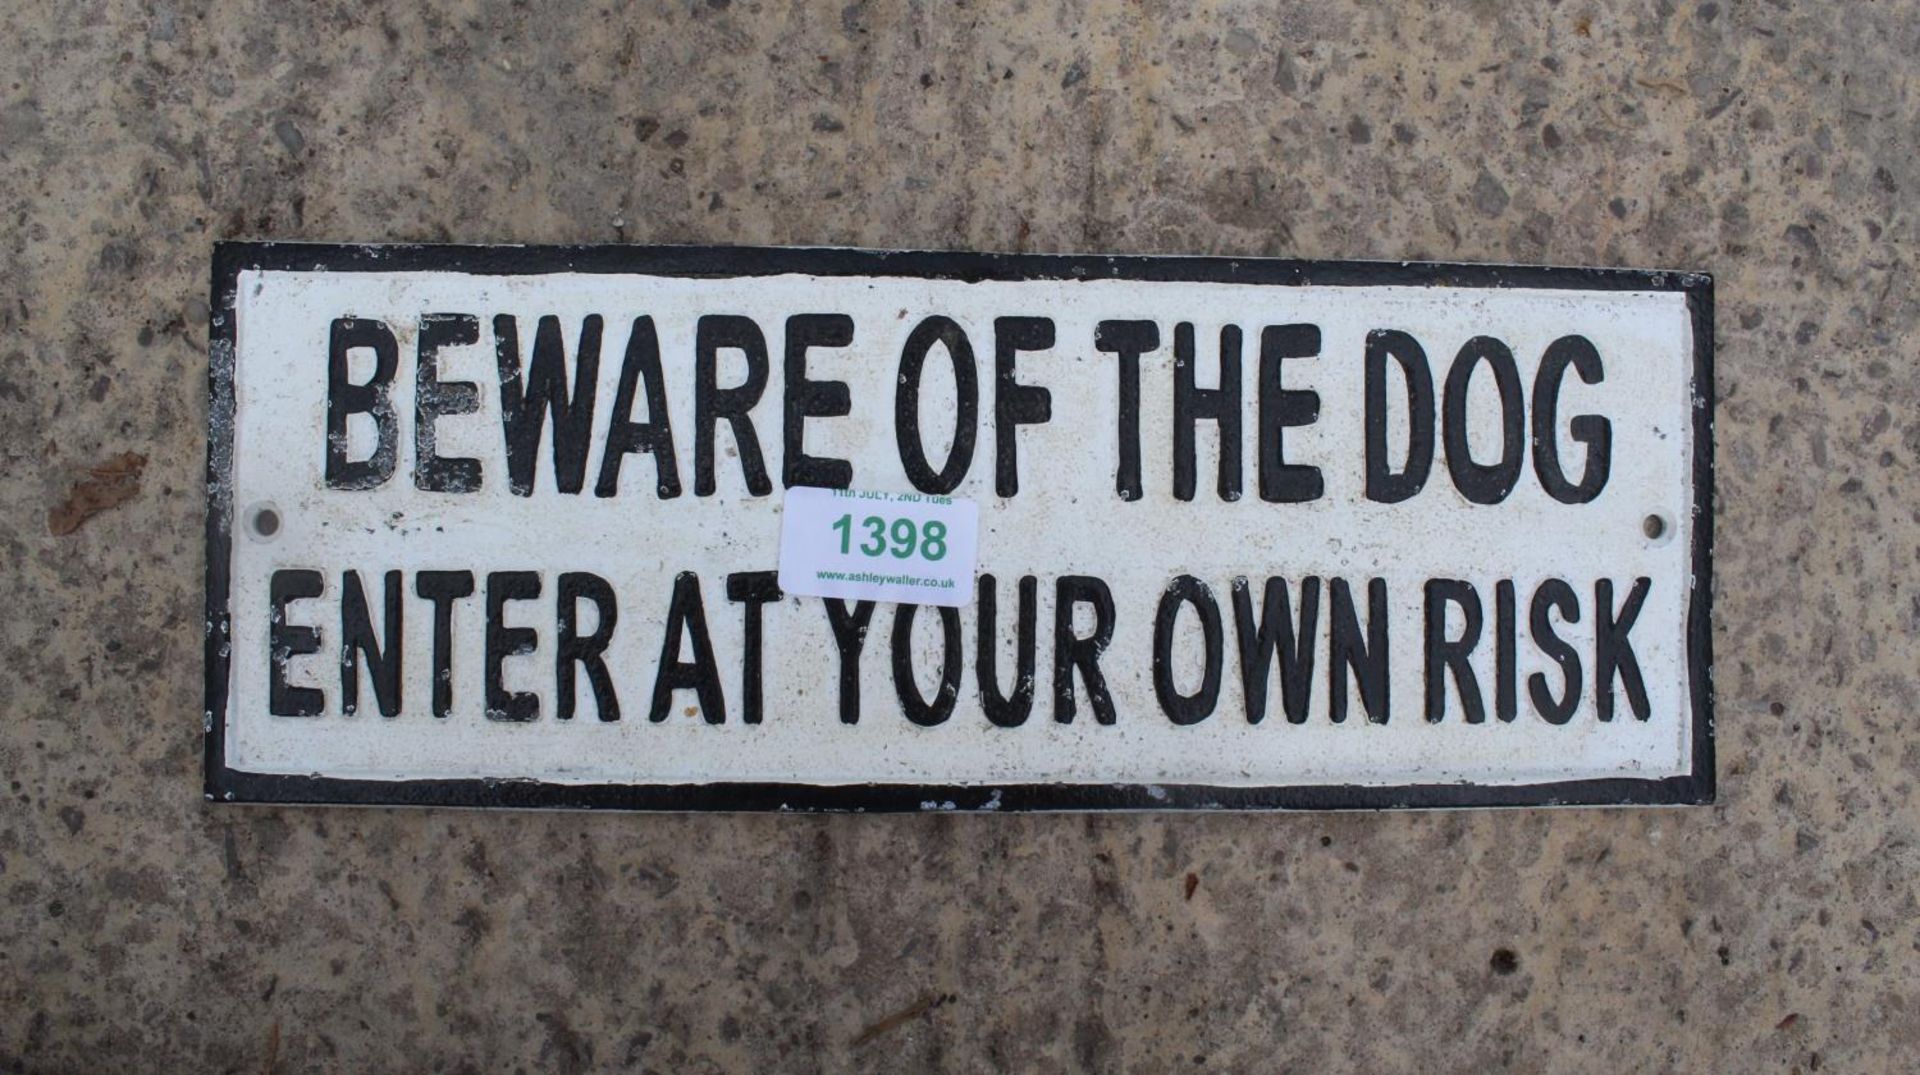 BEWARE OF THE DOG SIGN + VAT